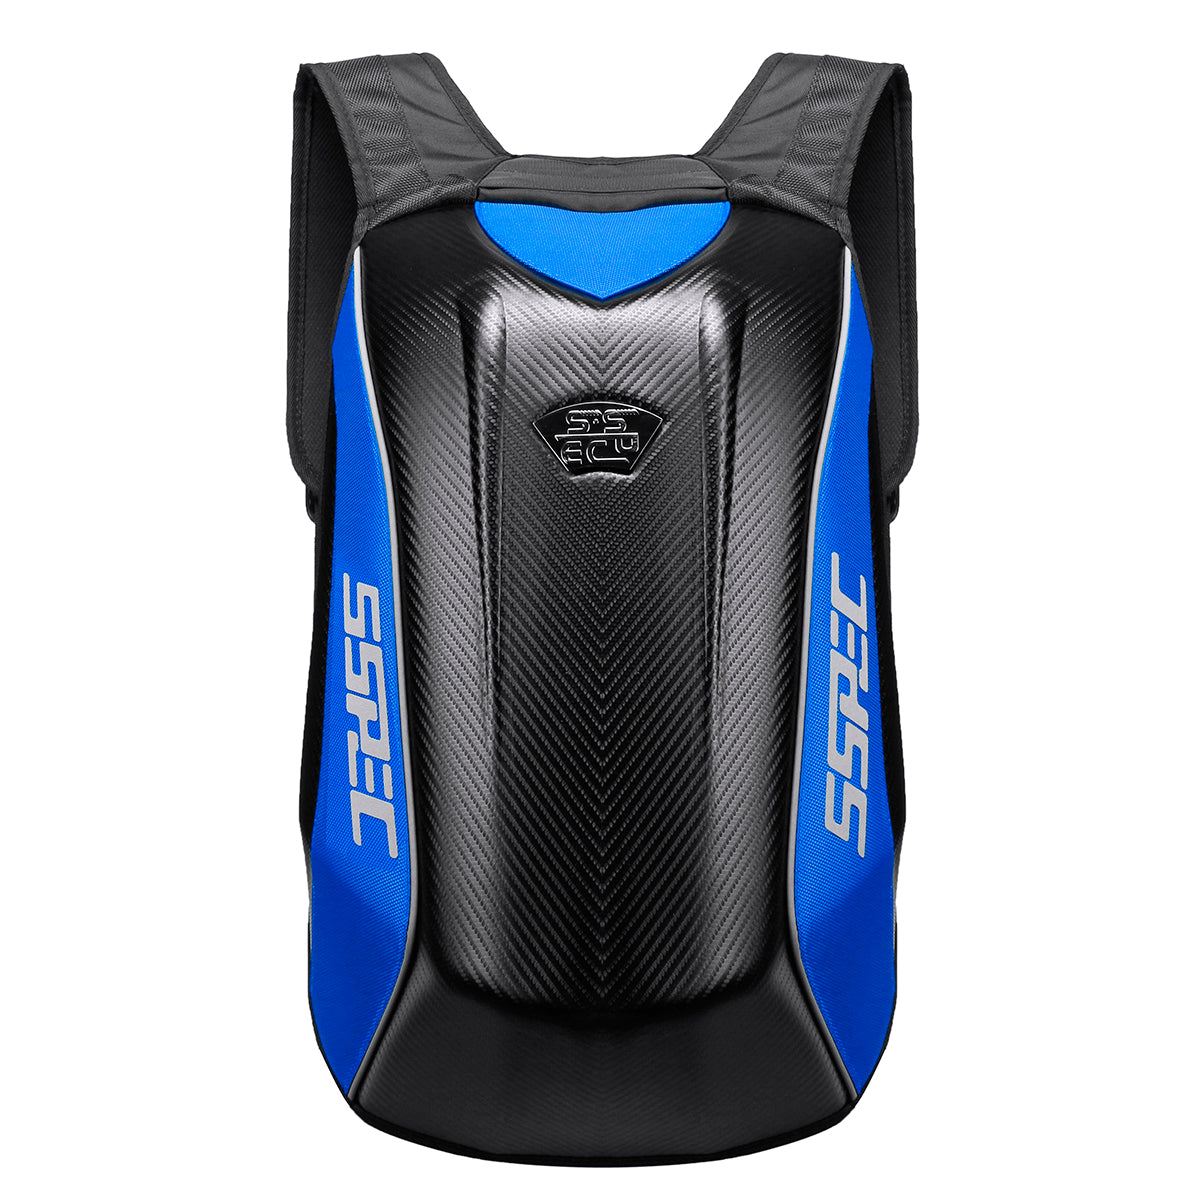 Royal Blue Motorcycle Helmet Backpack Motocross Riding Racing Storage Bag Carbon Fiber